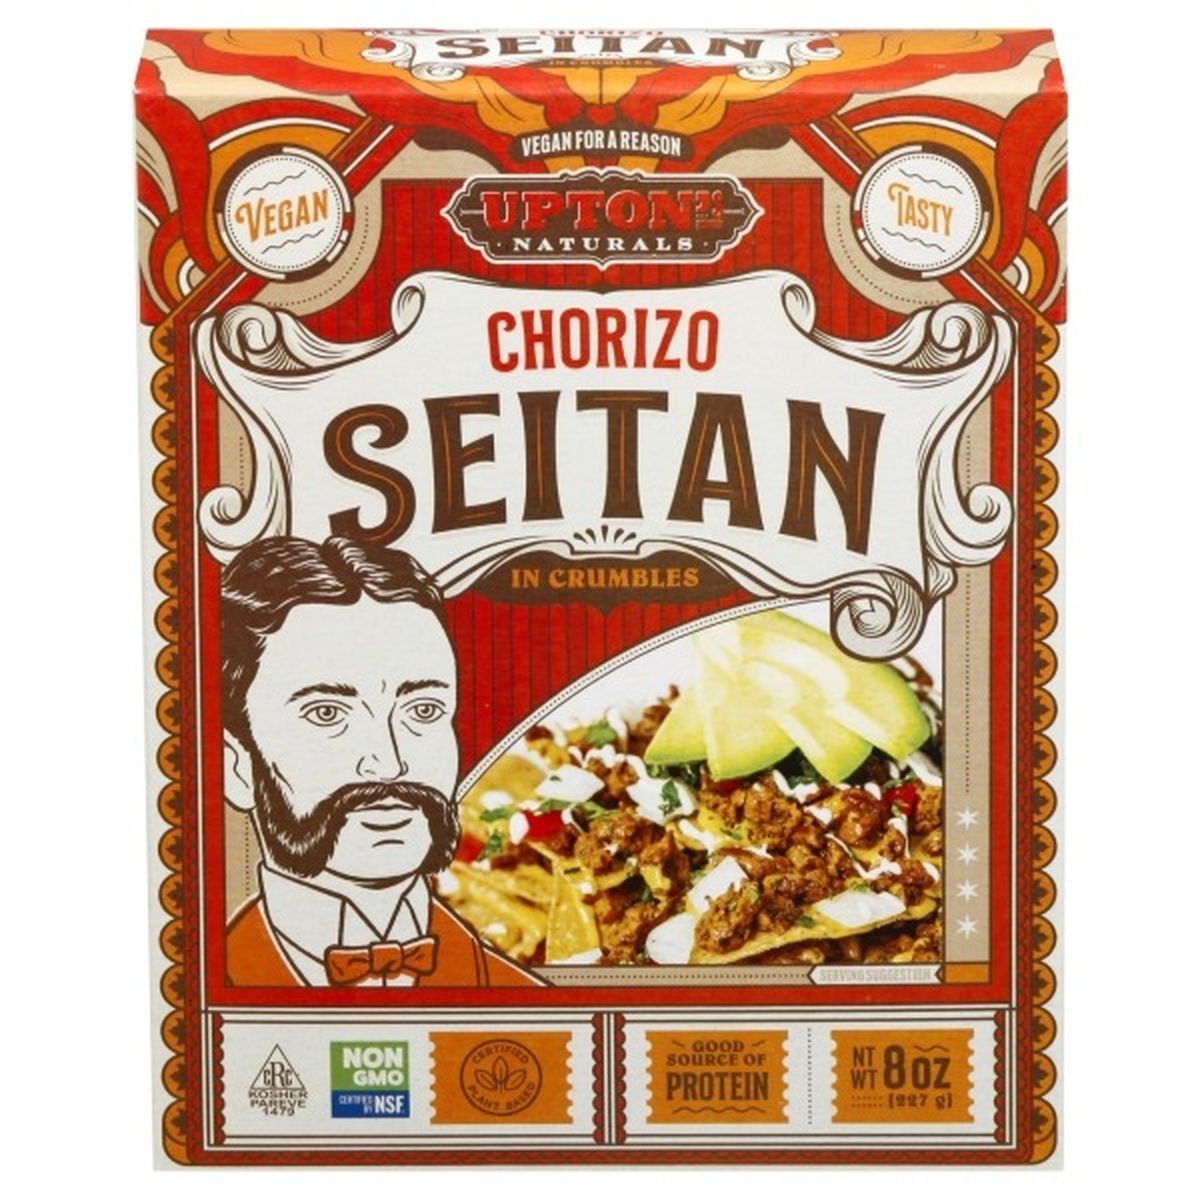 Calories in Upton's Naturals Seitan, in Crumbles, Chorizo